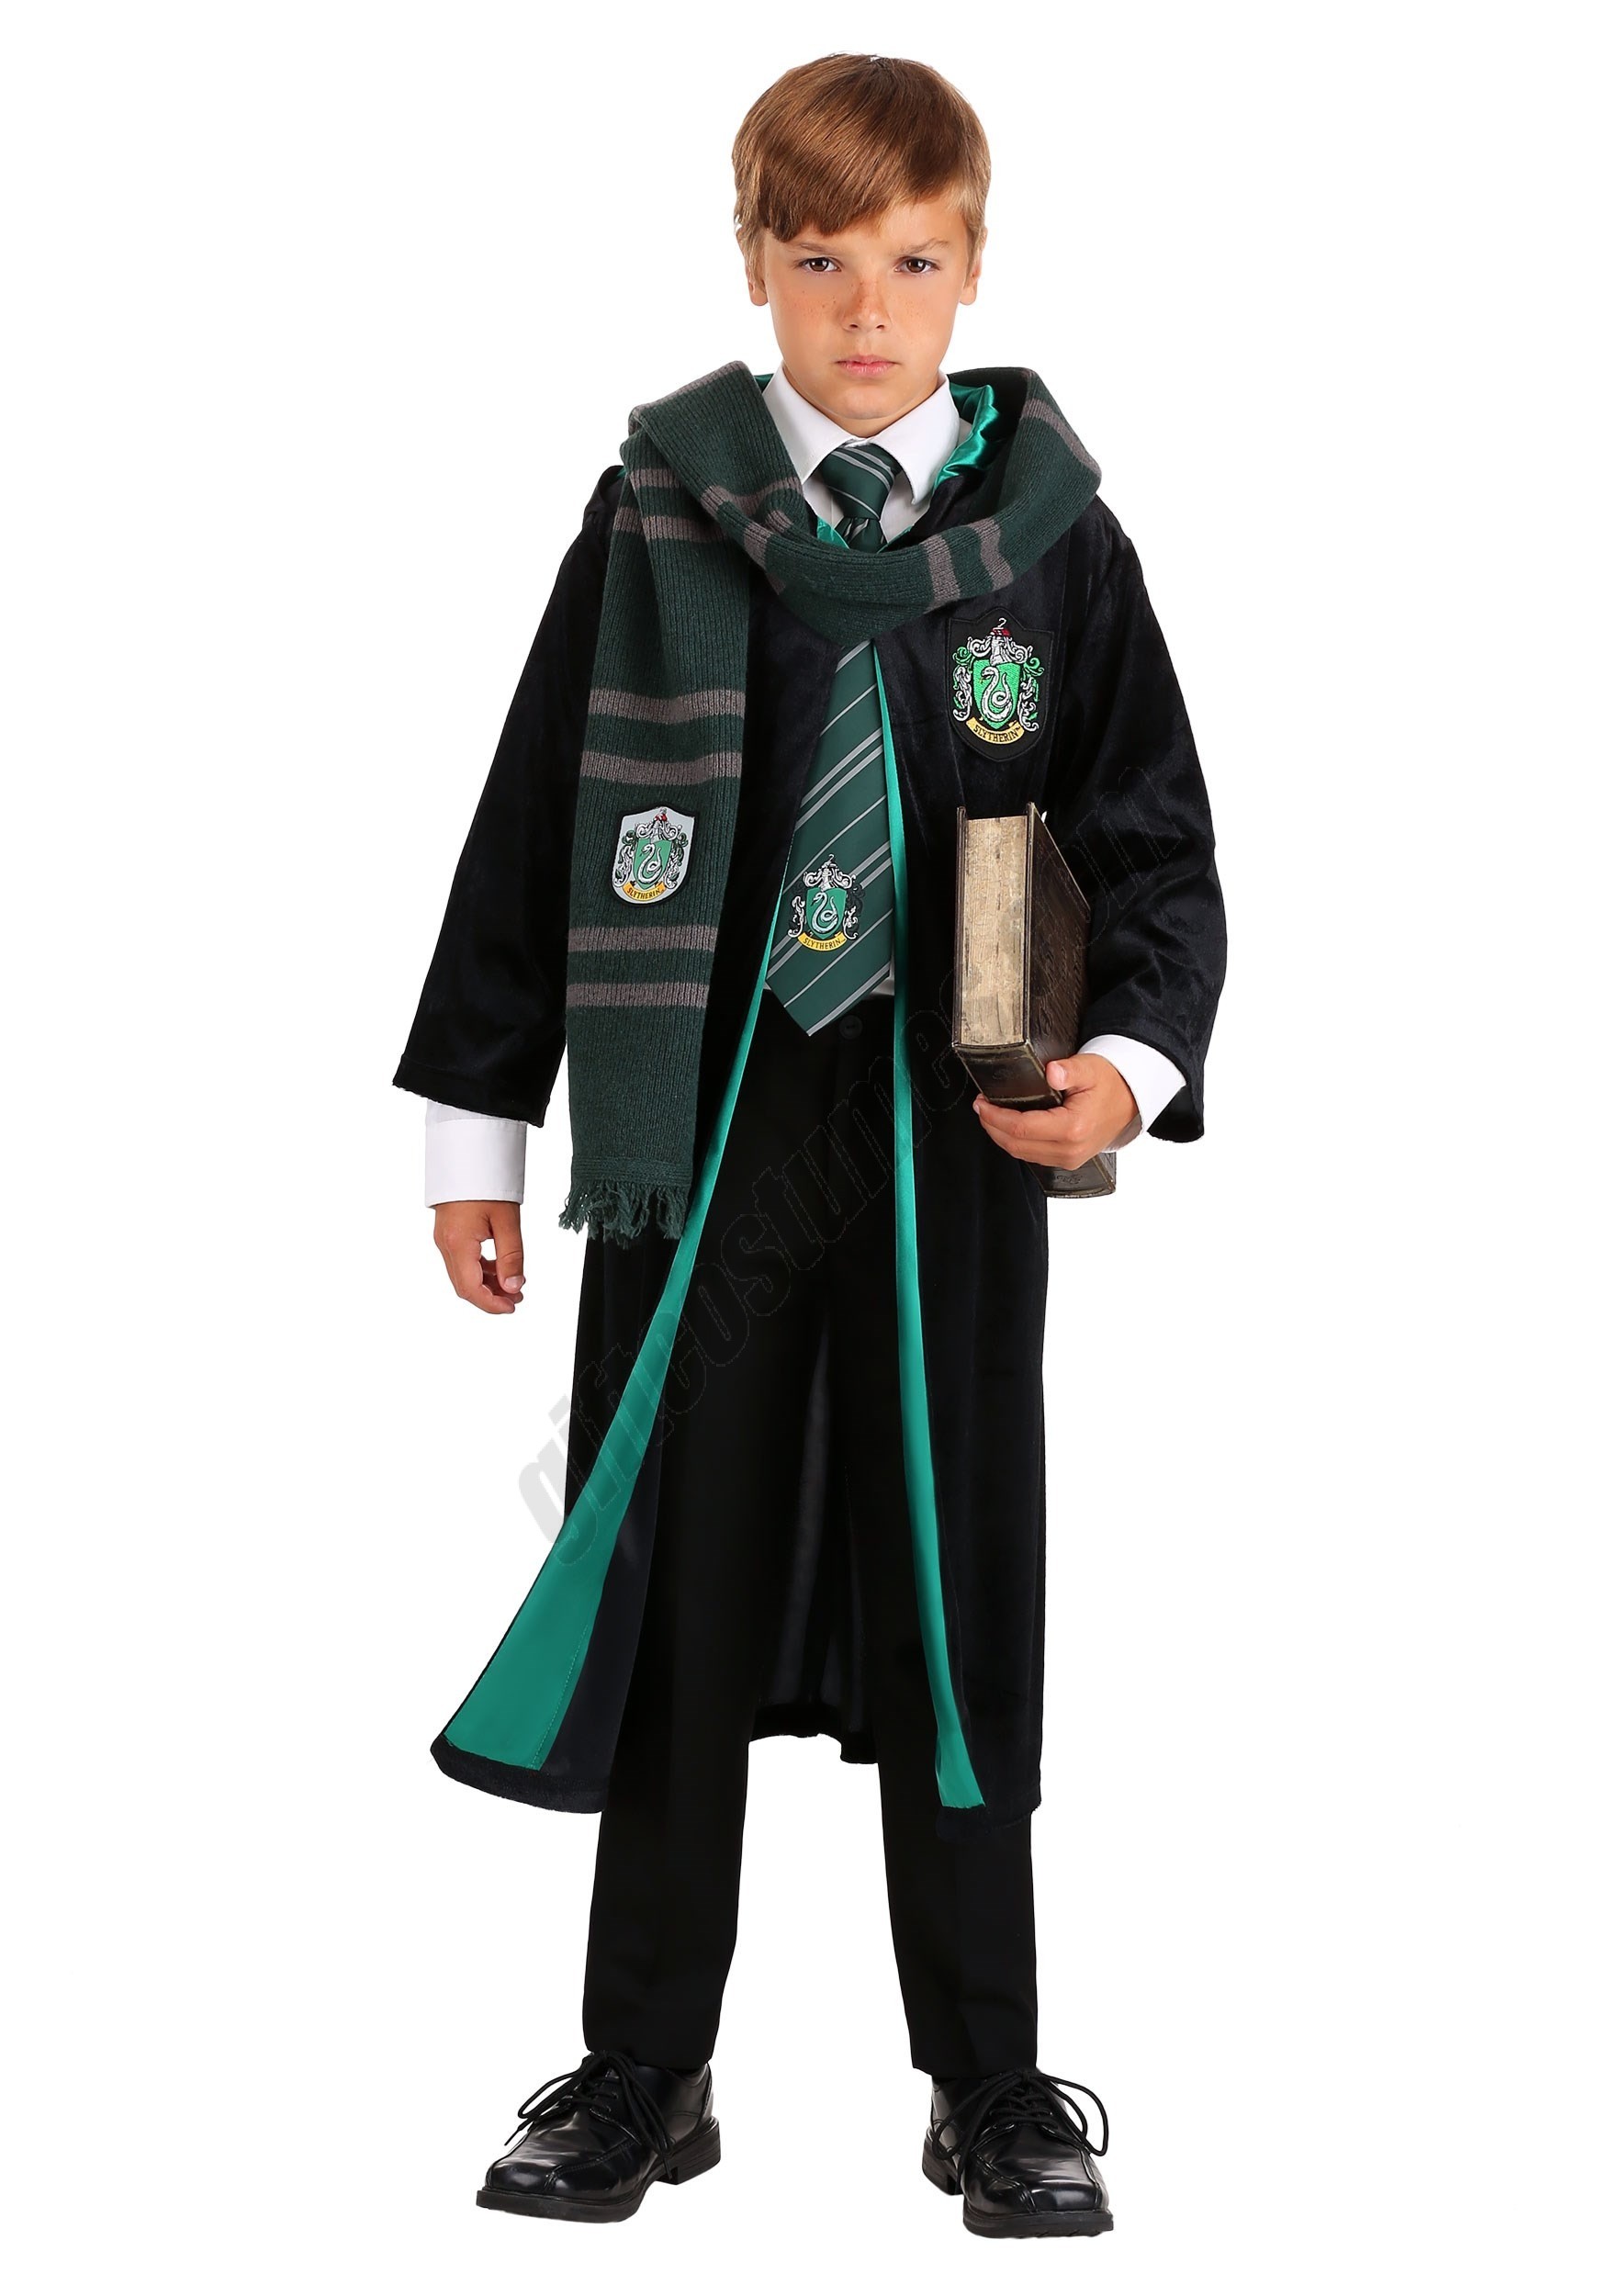 Harry Potter Kids Deluxe Slytherin Robe Costume Promotions - Harry Potter Kids Deluxe Slytherin Robe Costume Promotions